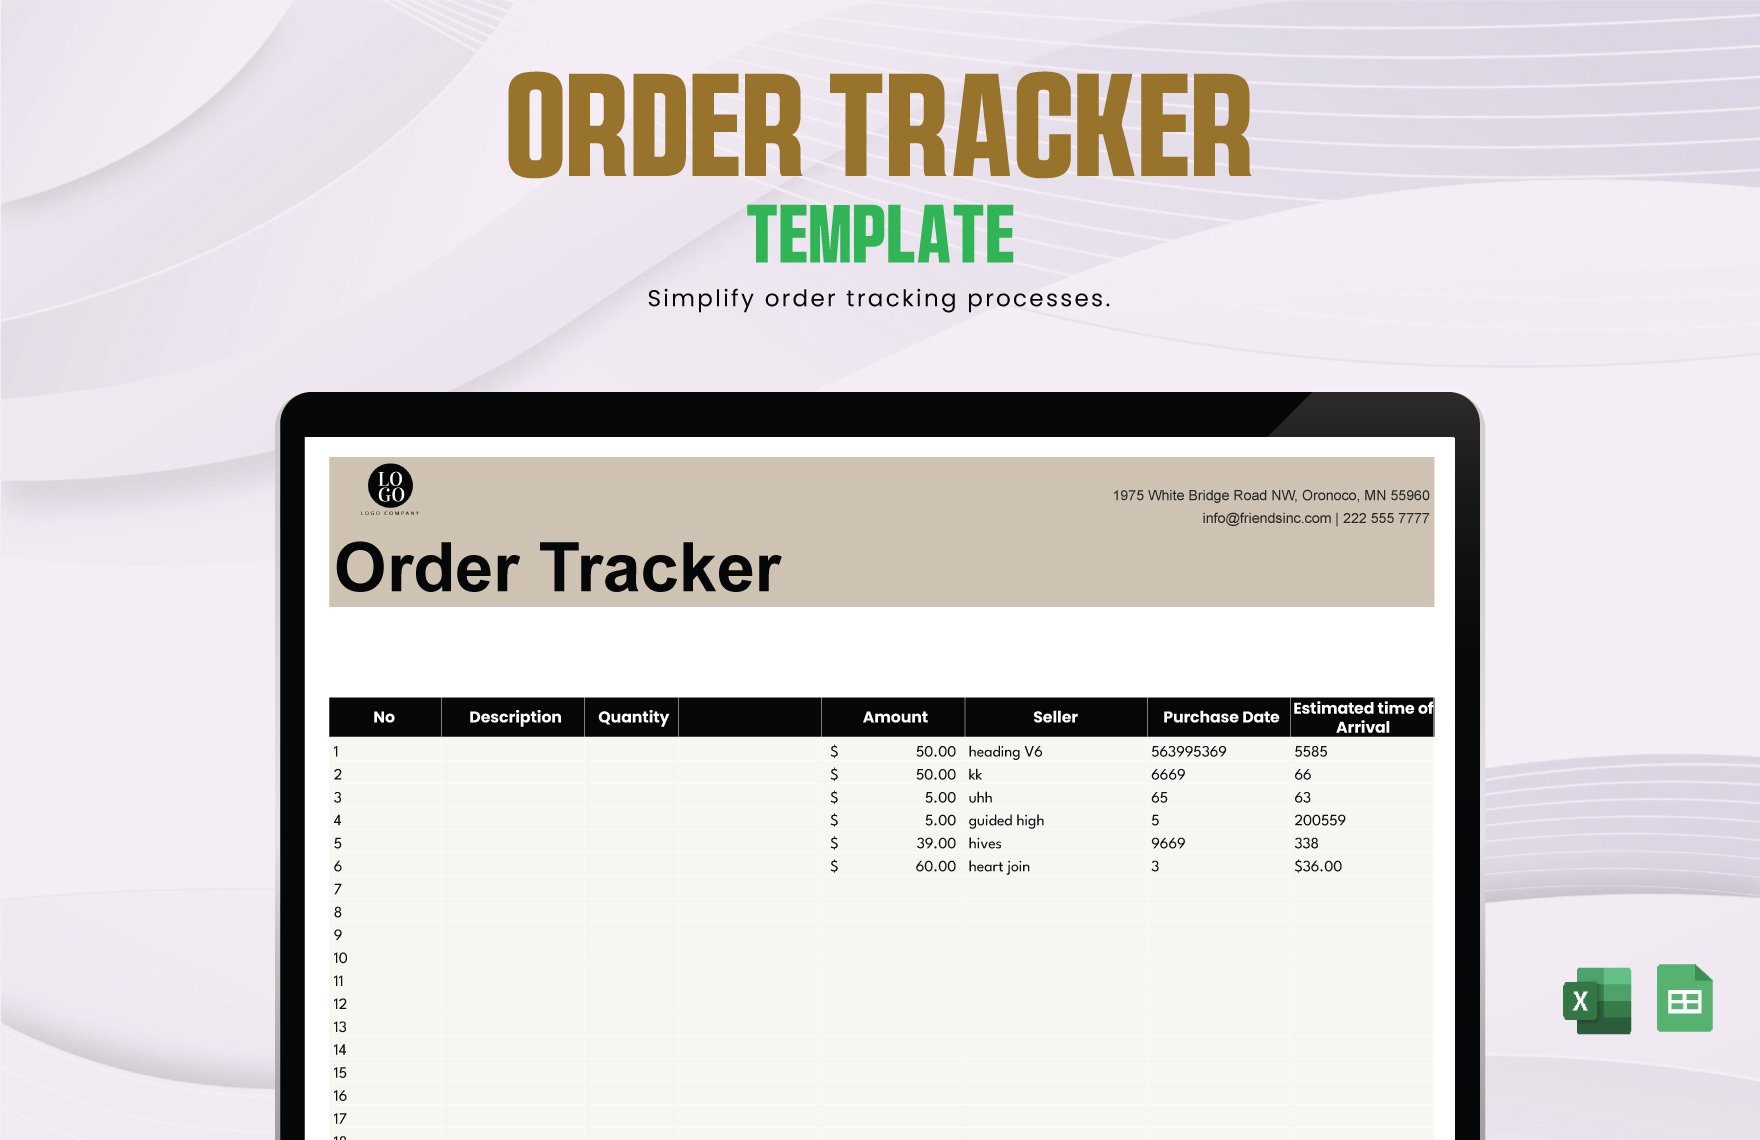 Order Tracker Template